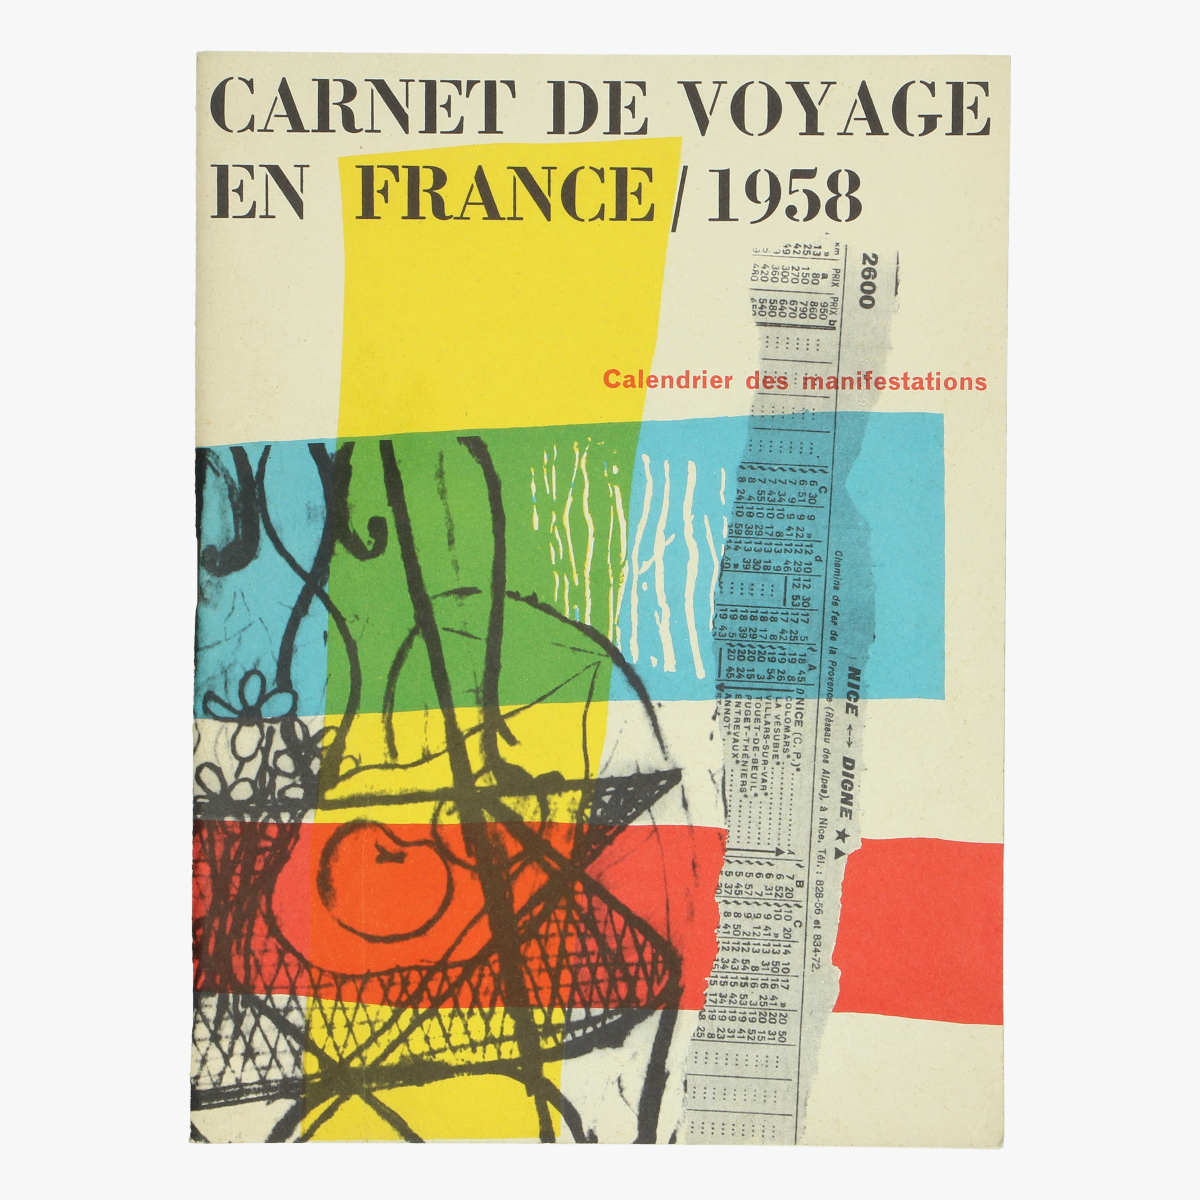 Afbeeldingen van expo 58 carnet de voyage en france / 1958 calendrier des manifestions 